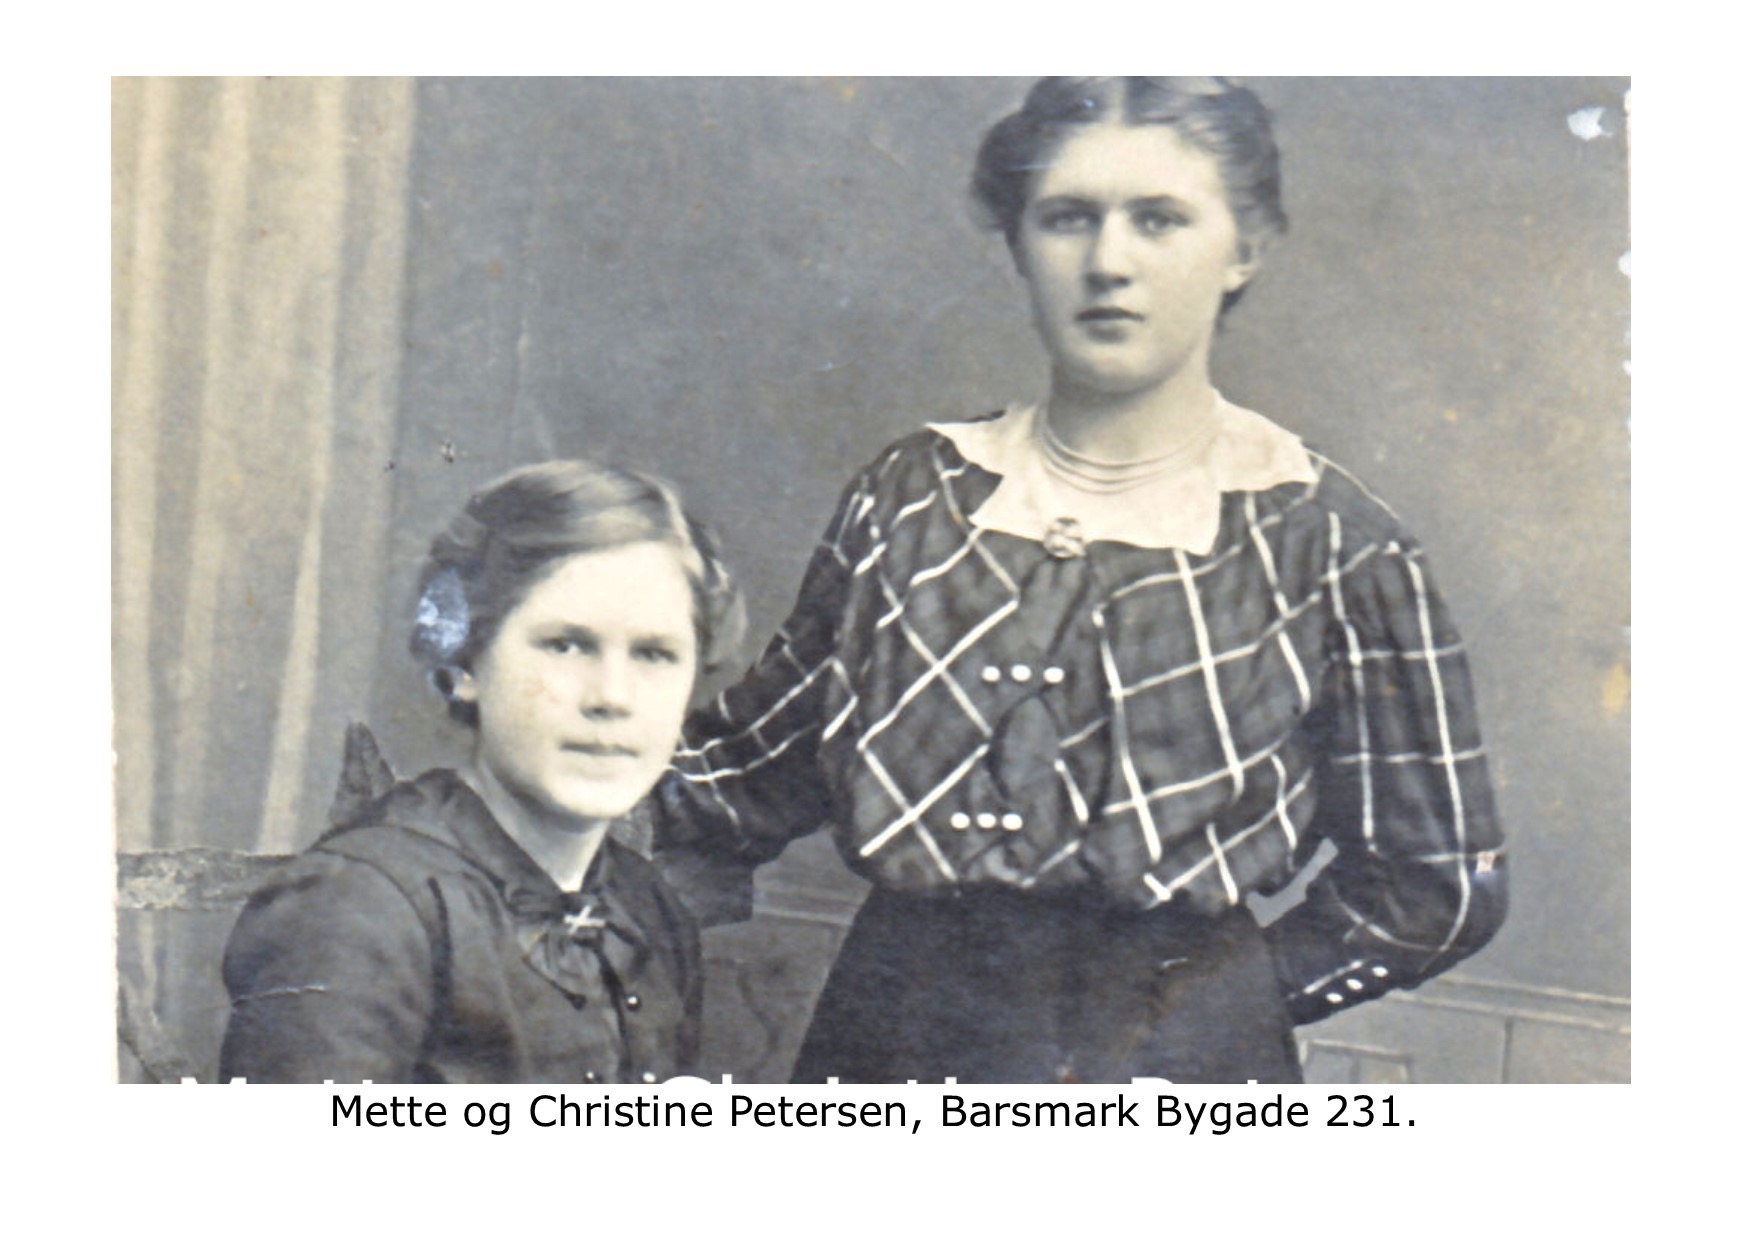 Mette og Christine Petersen 